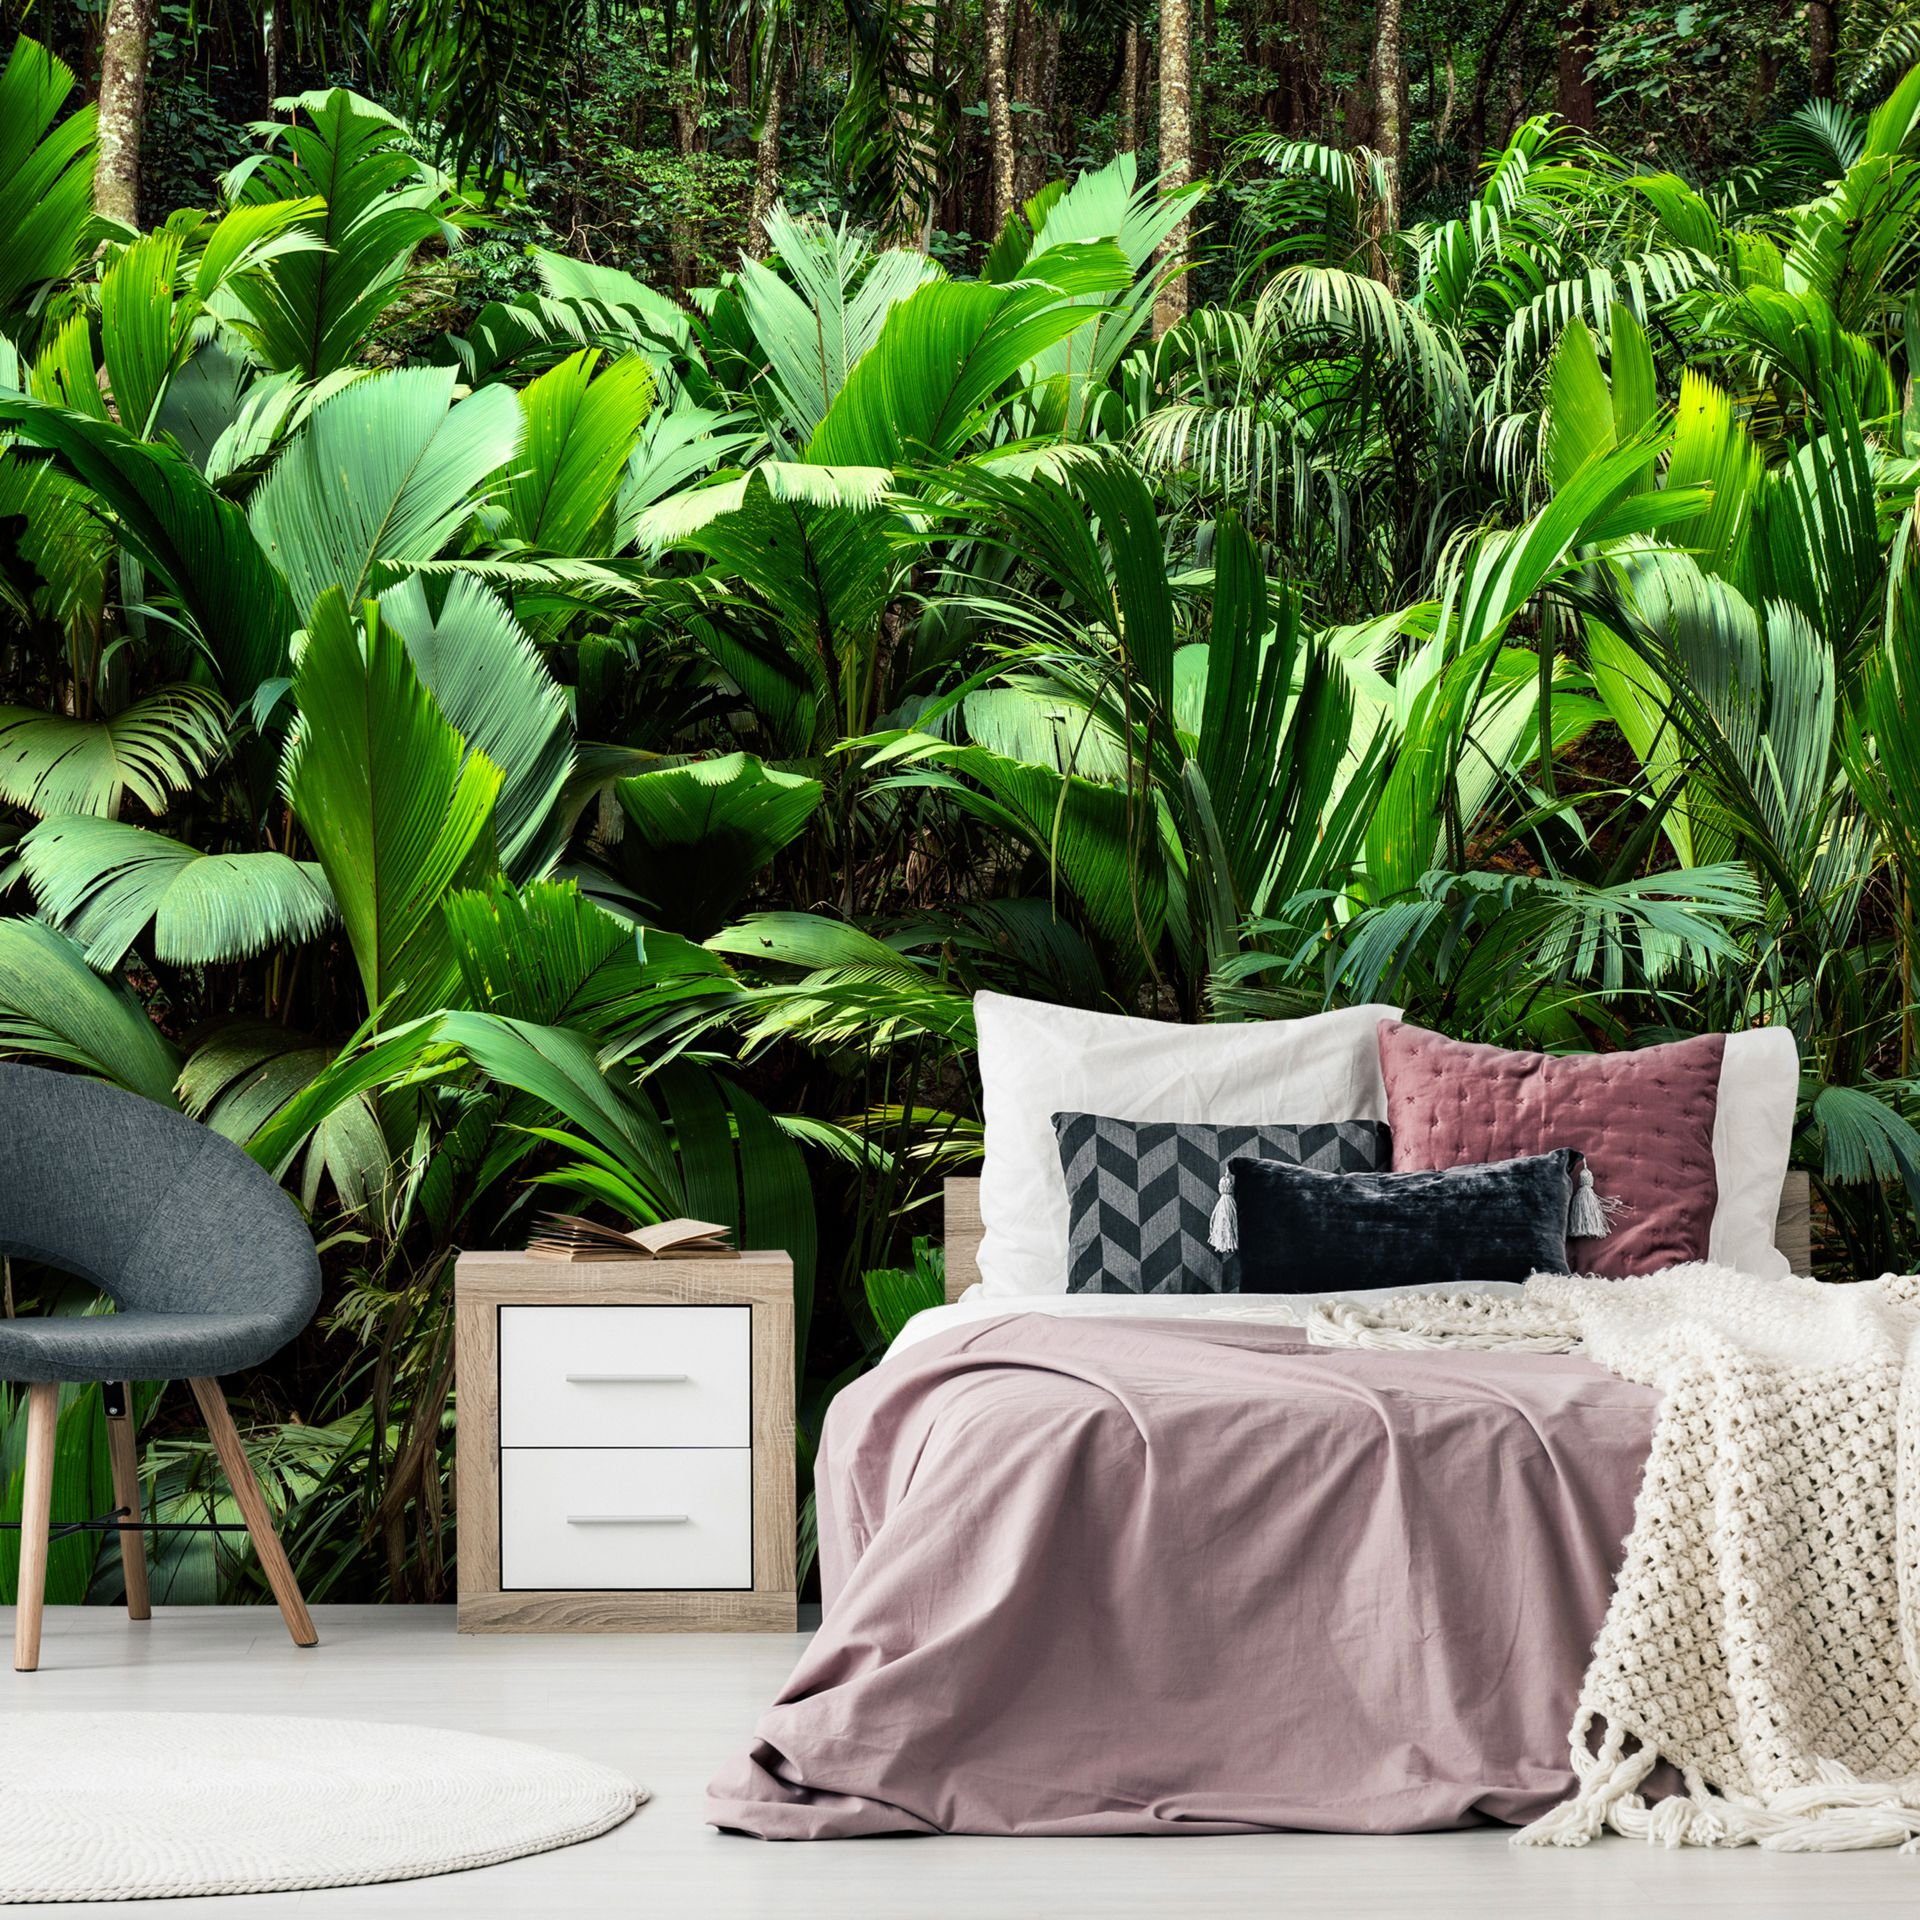 KUNSTLOFT Vliestapete Freshness of the Jungle 1x0.7 m, halb-matt, lichtbeständige Design Tapete | Vliestapeten